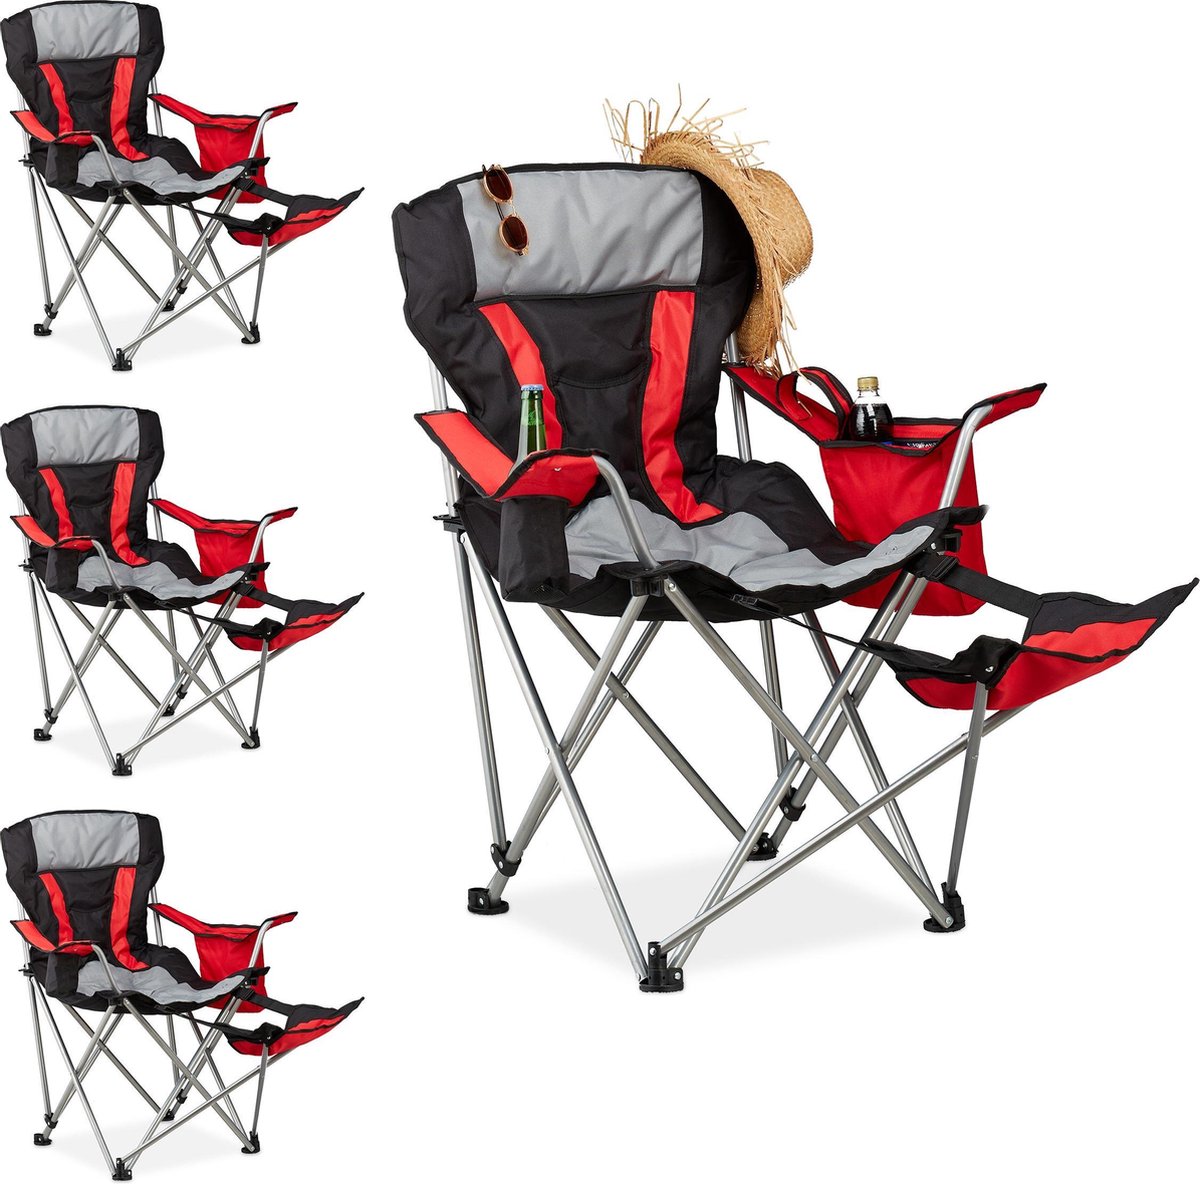 Relaxdays 4 x campingstoel met voetensteun - klapstoel - kampeerstoel - vouwstoel - 150kg